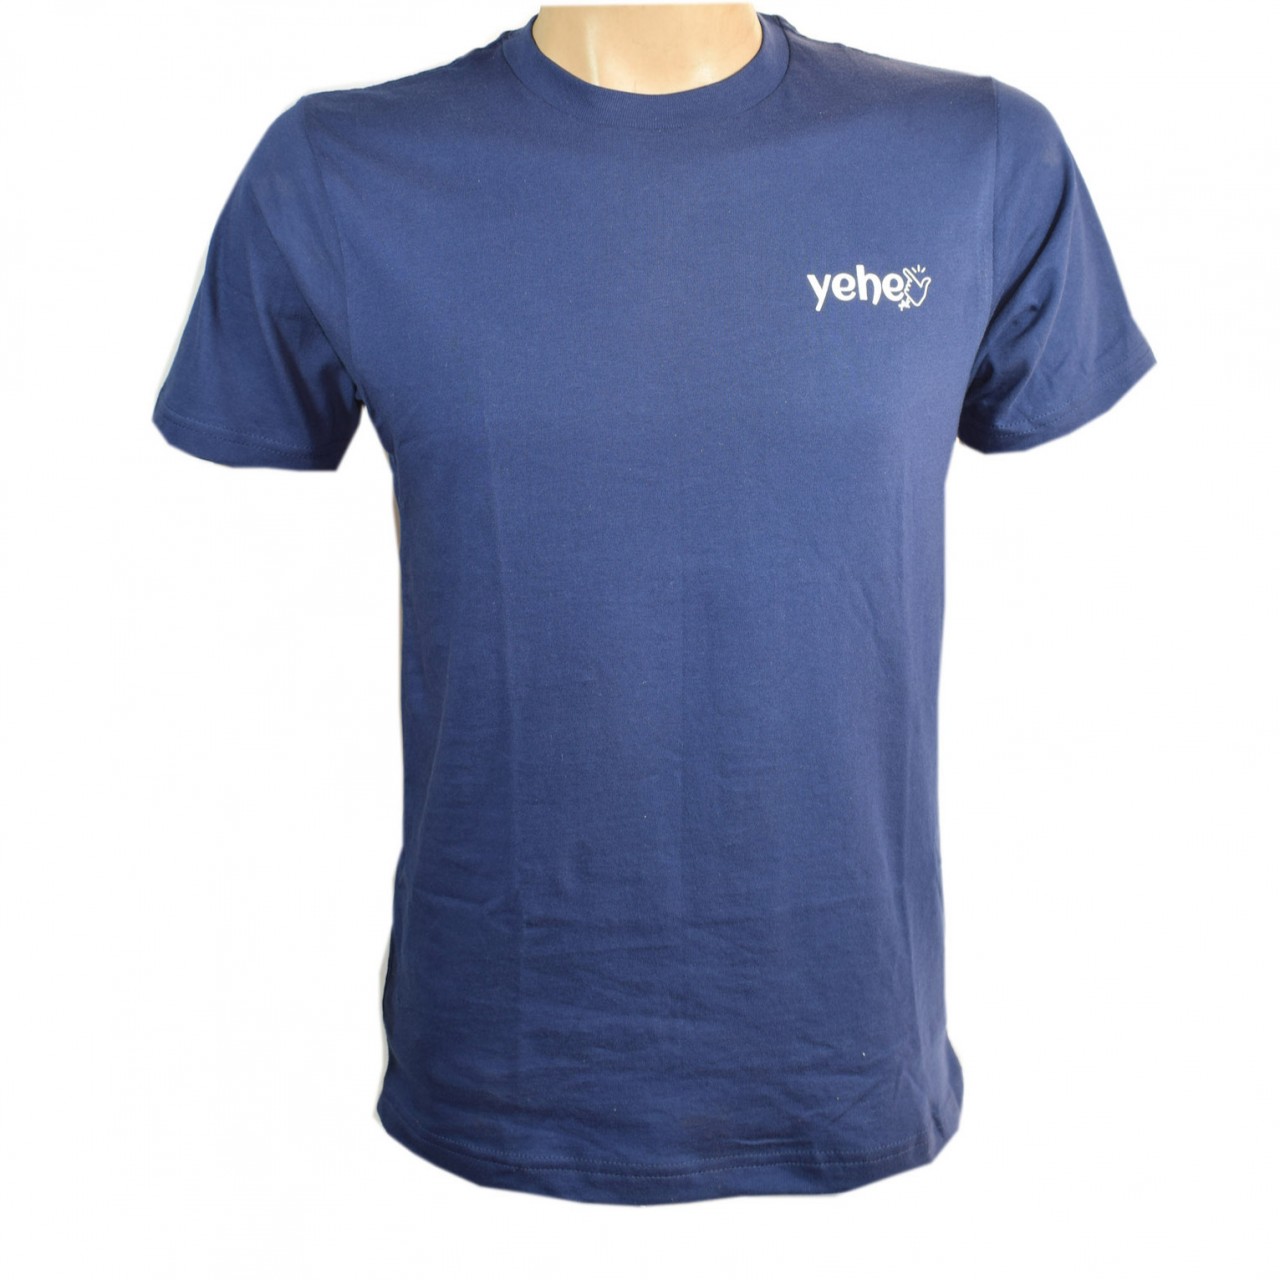 T-Shirt Navy Blue Summer Plain 100% Cotton for Men